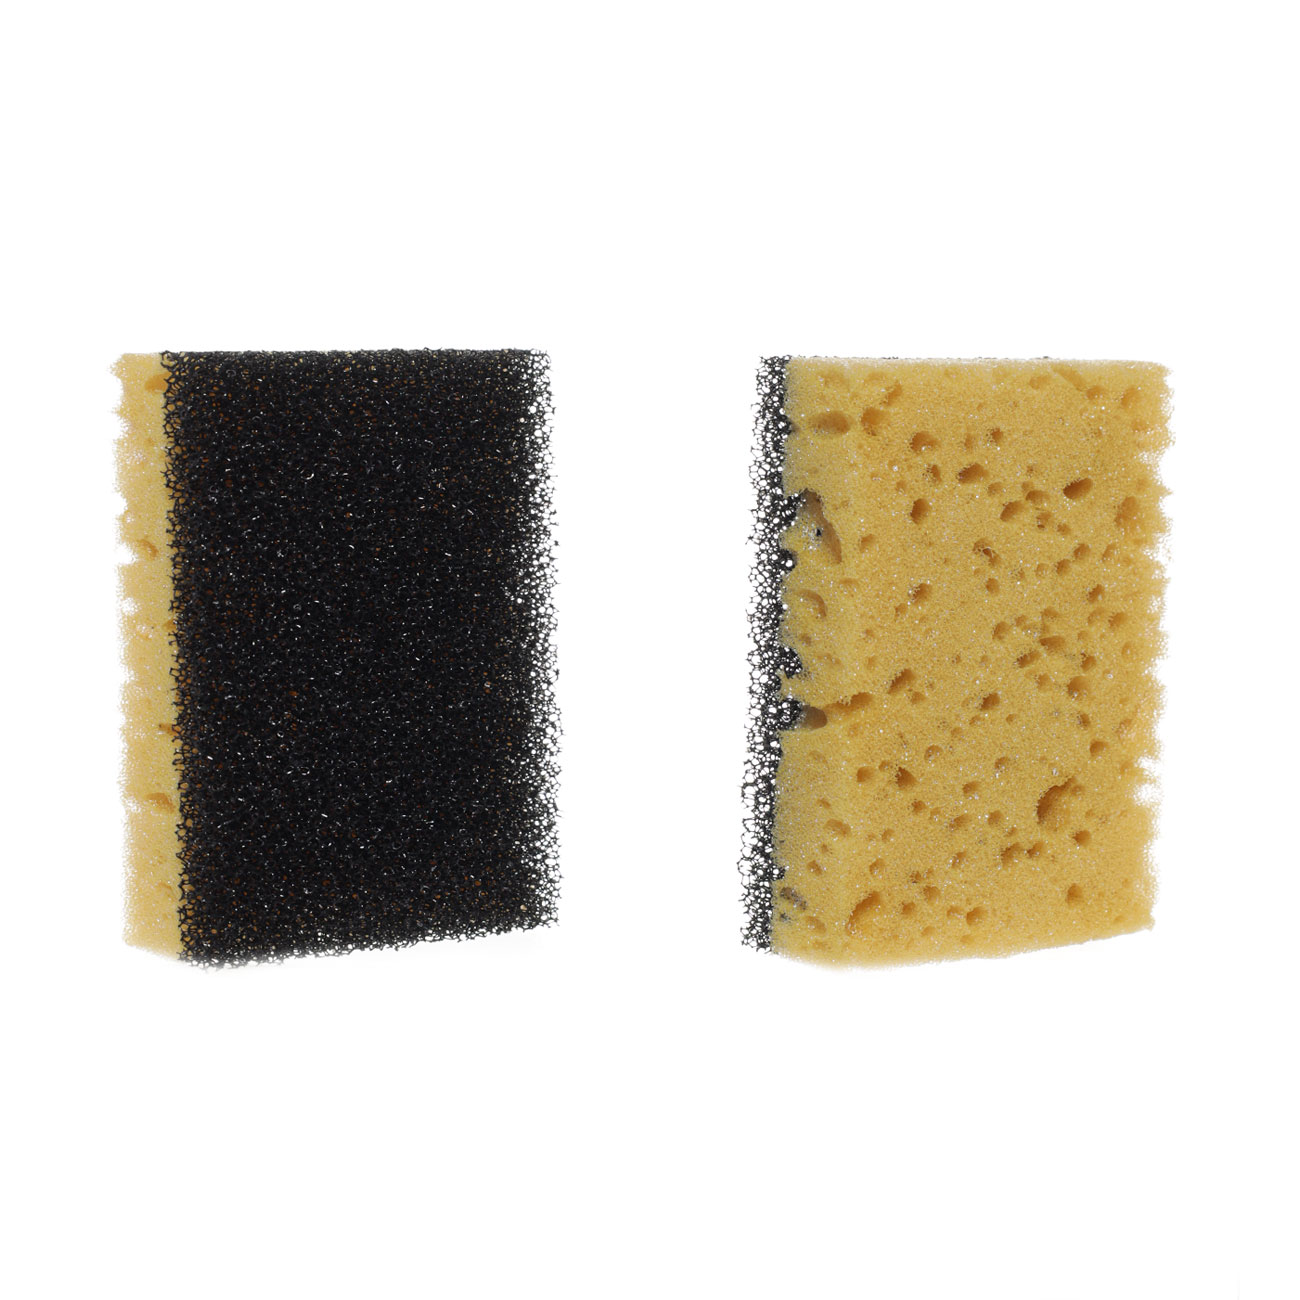 Dish washing sponge, 10x7 cm, 3 pcs, foam rubber / abrasive, black and yellow, Black clean изображение № 2